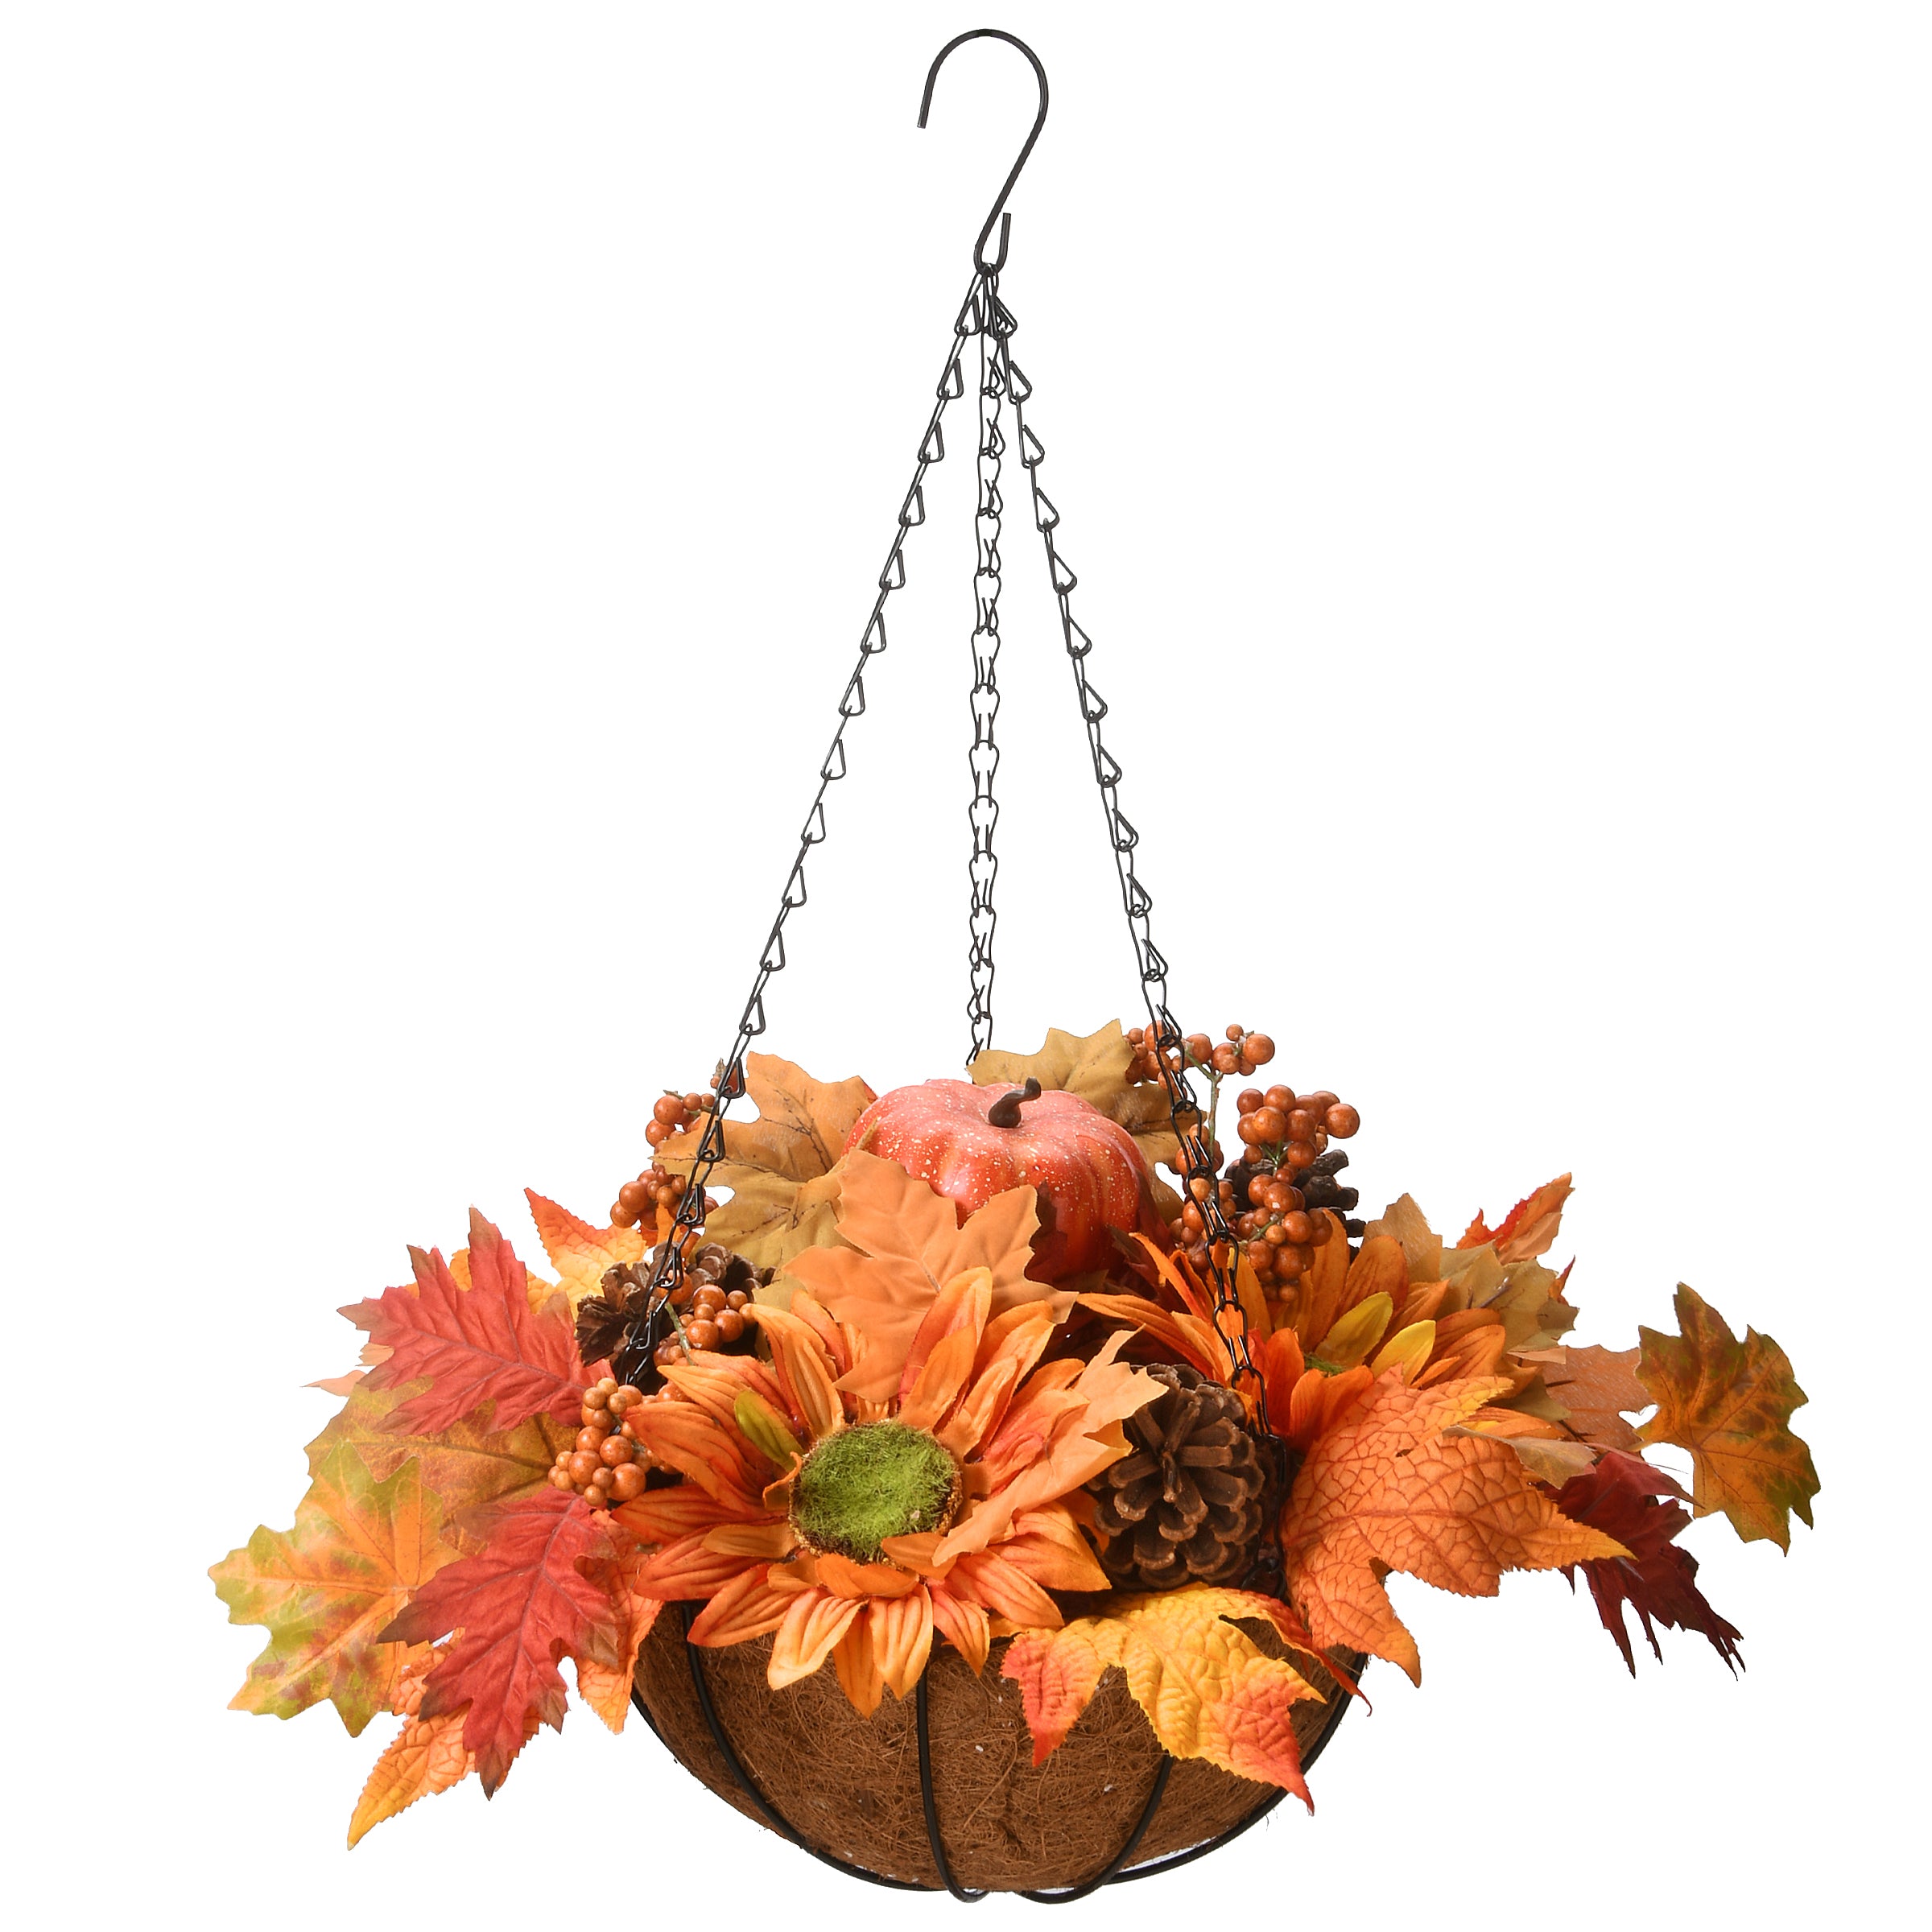 18" Hanging Basket with Maple Leaves, 3 Sunflowers, 3 Cones, 3 Berries & 1 Pumpkin